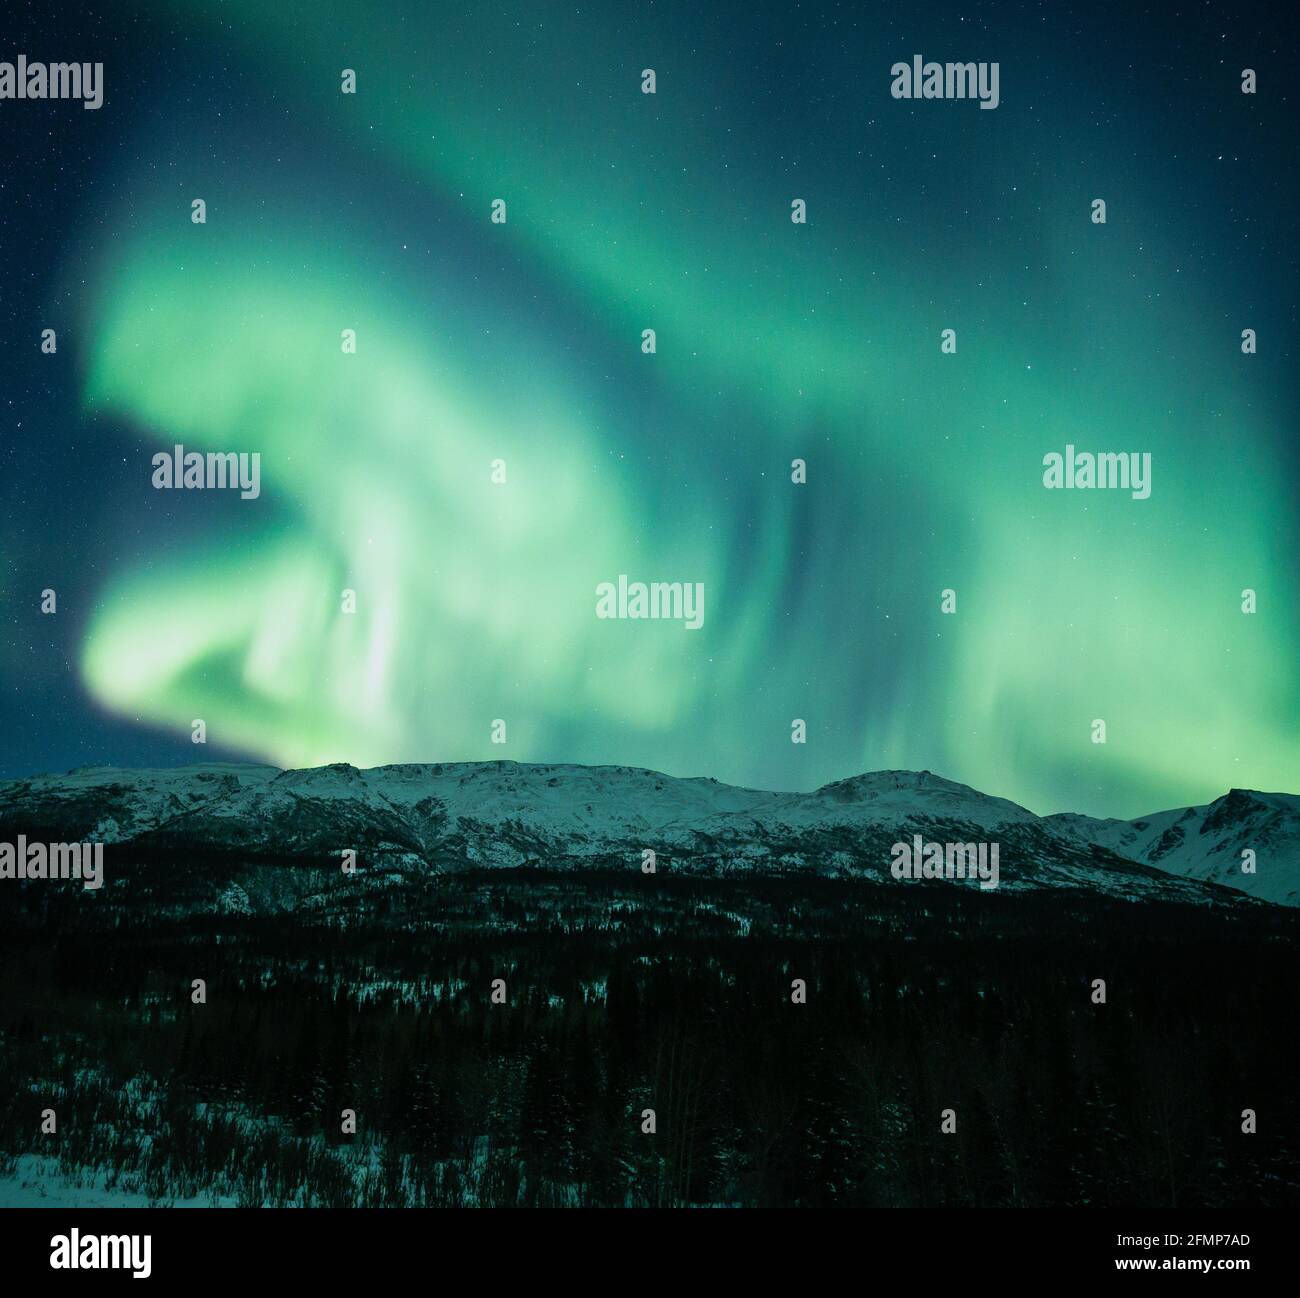 Auroras dancing over Fairbanks, Alaska! Stock Photo